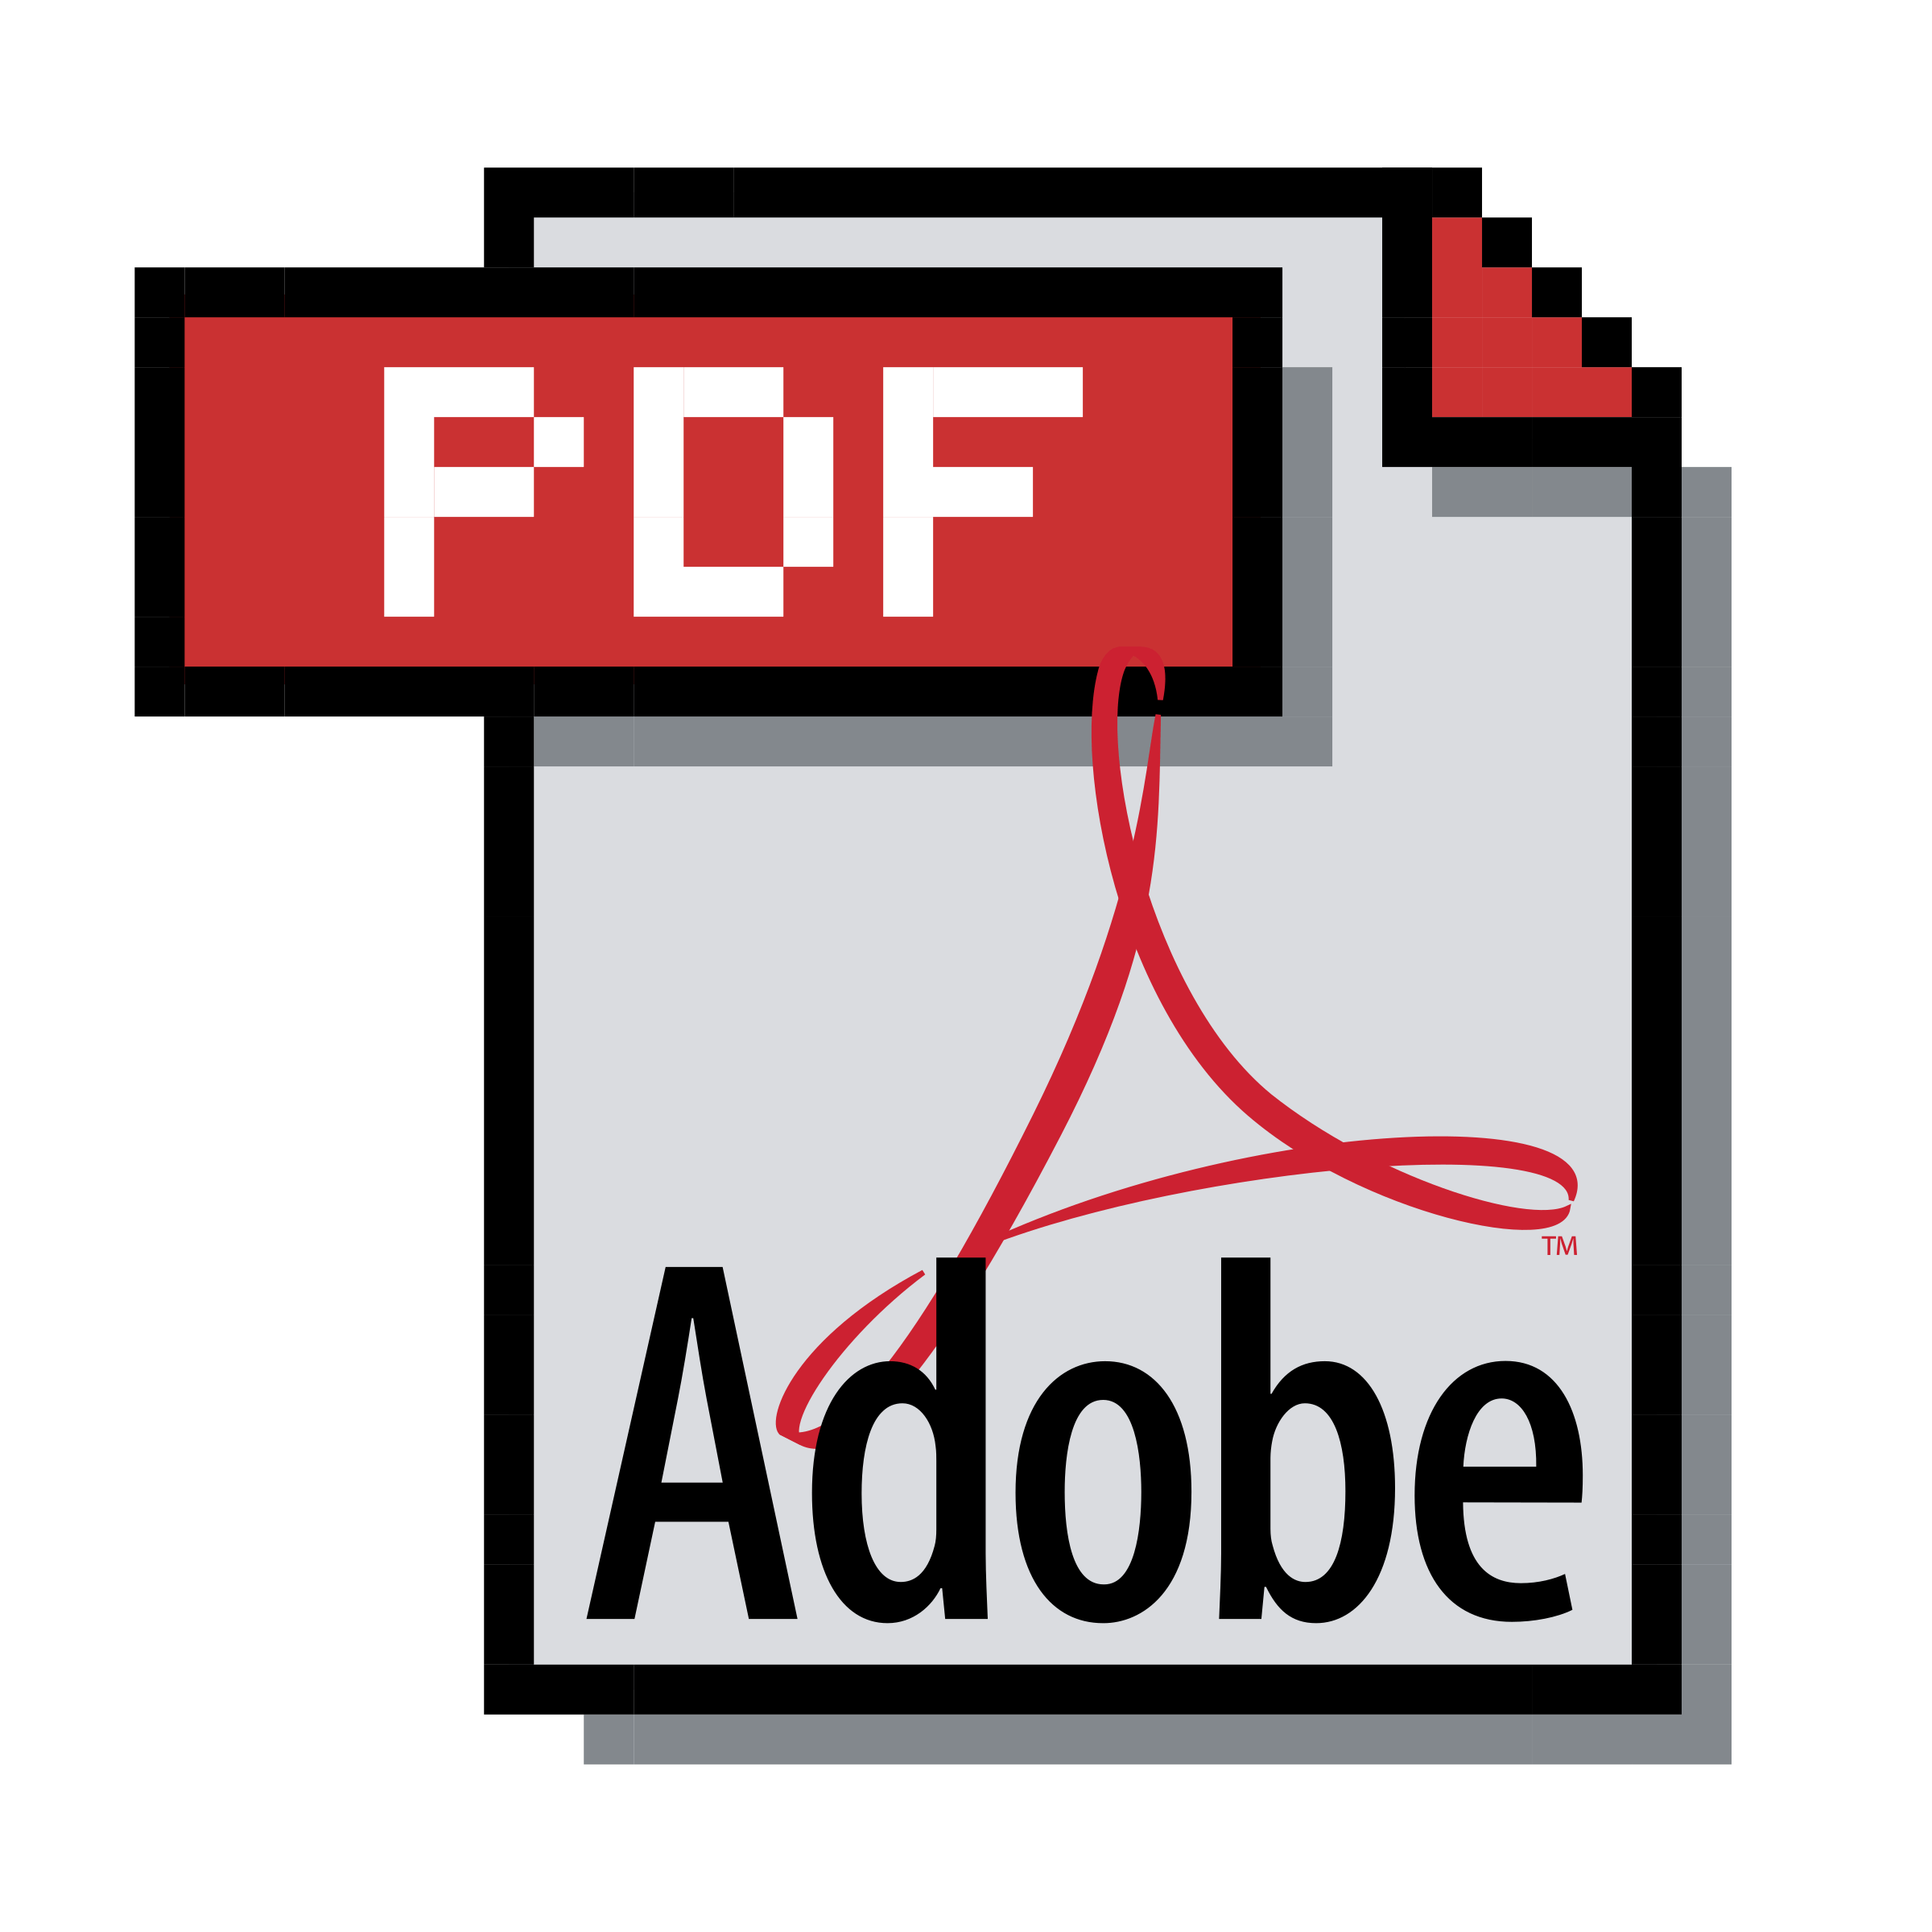 Adobe PDF Logo - Adobe PDF Logo PNG Transparent & SVG Vector - Freebie Supply